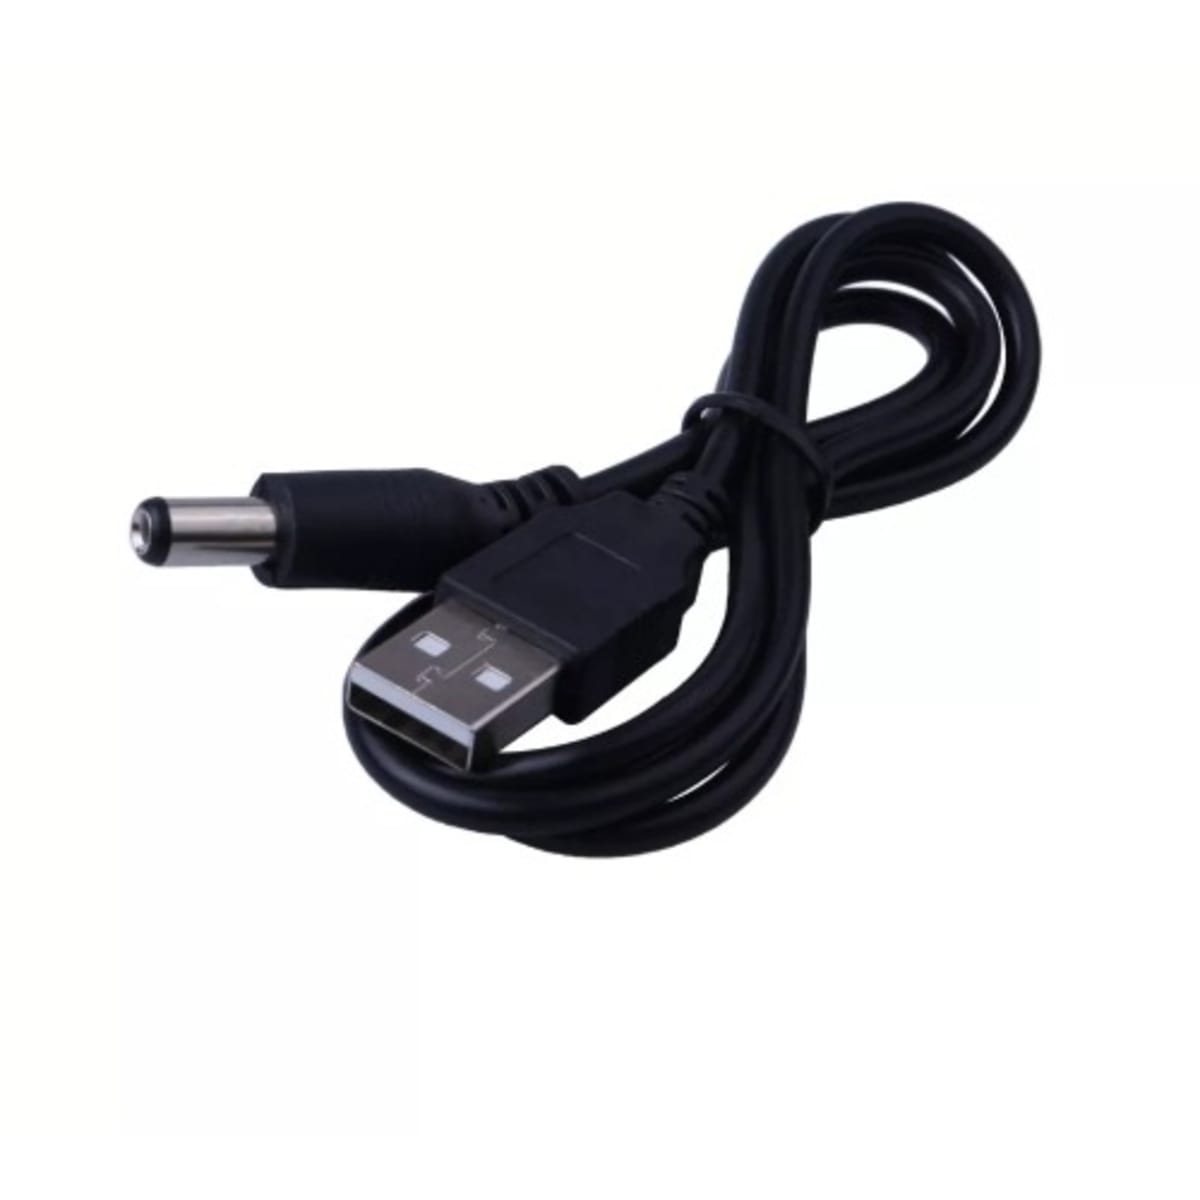 USB Step Up Converter Cable - DC 5V to 12V